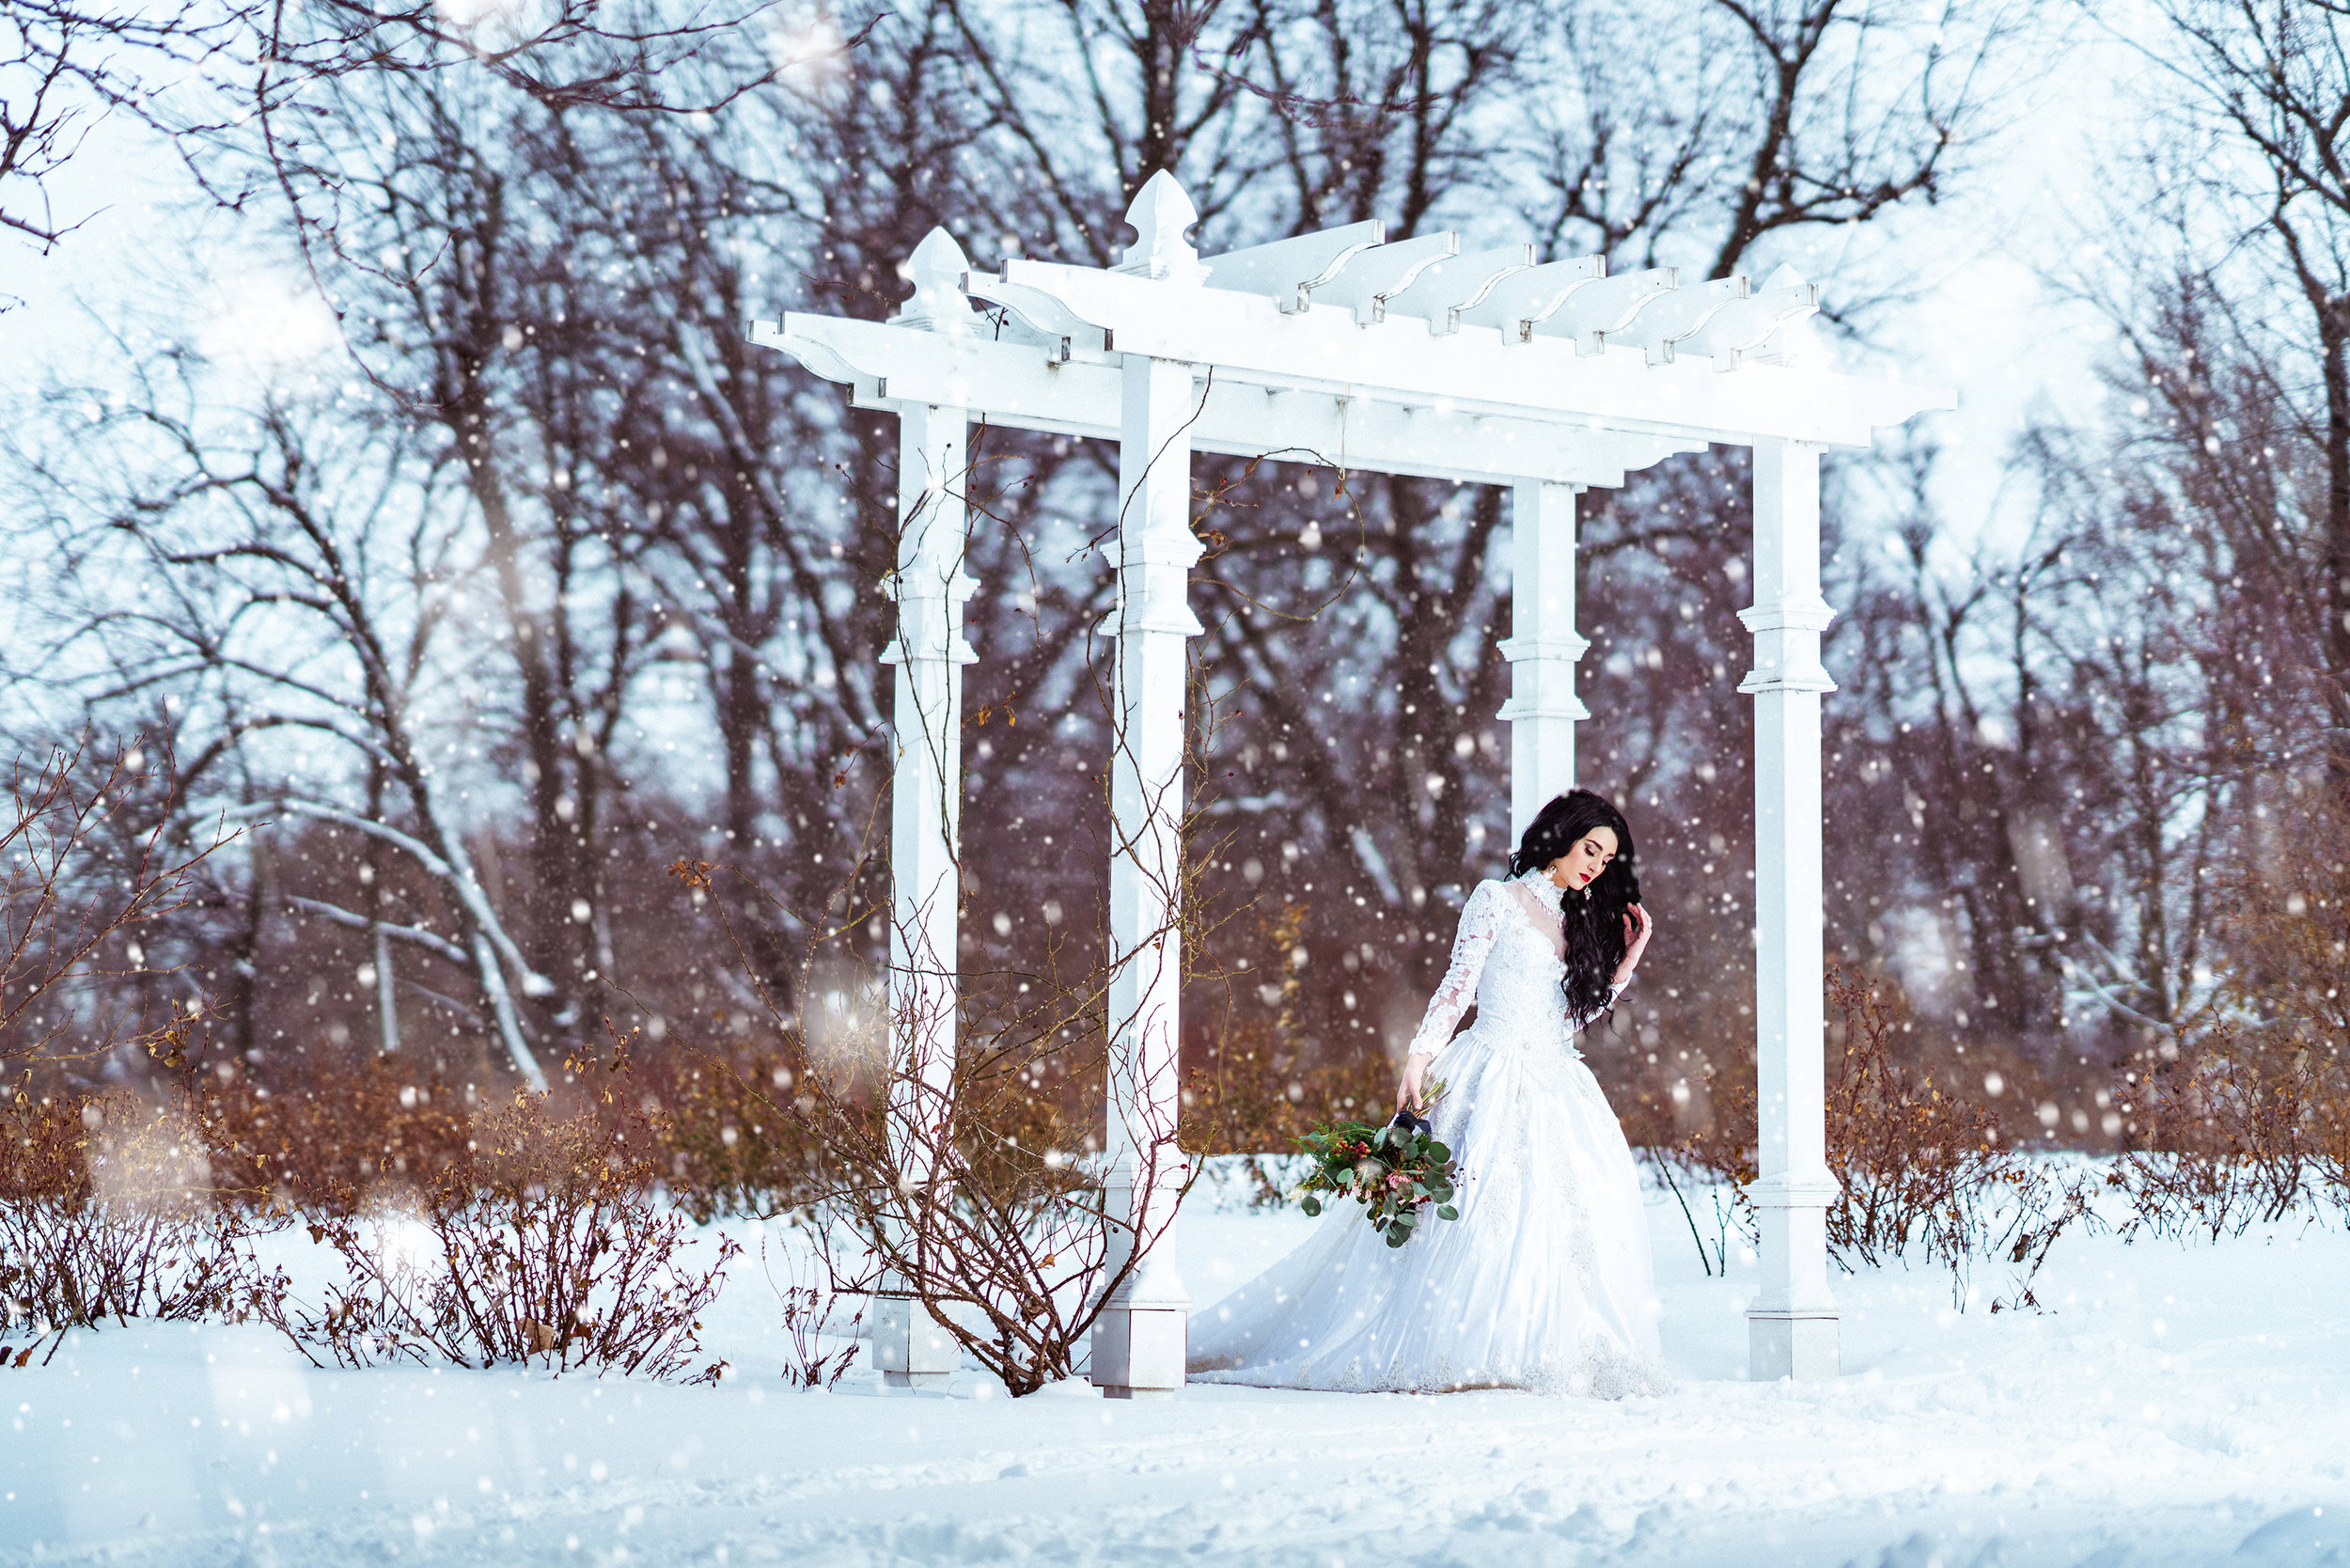 Winter Bride-snow1.1.jpg